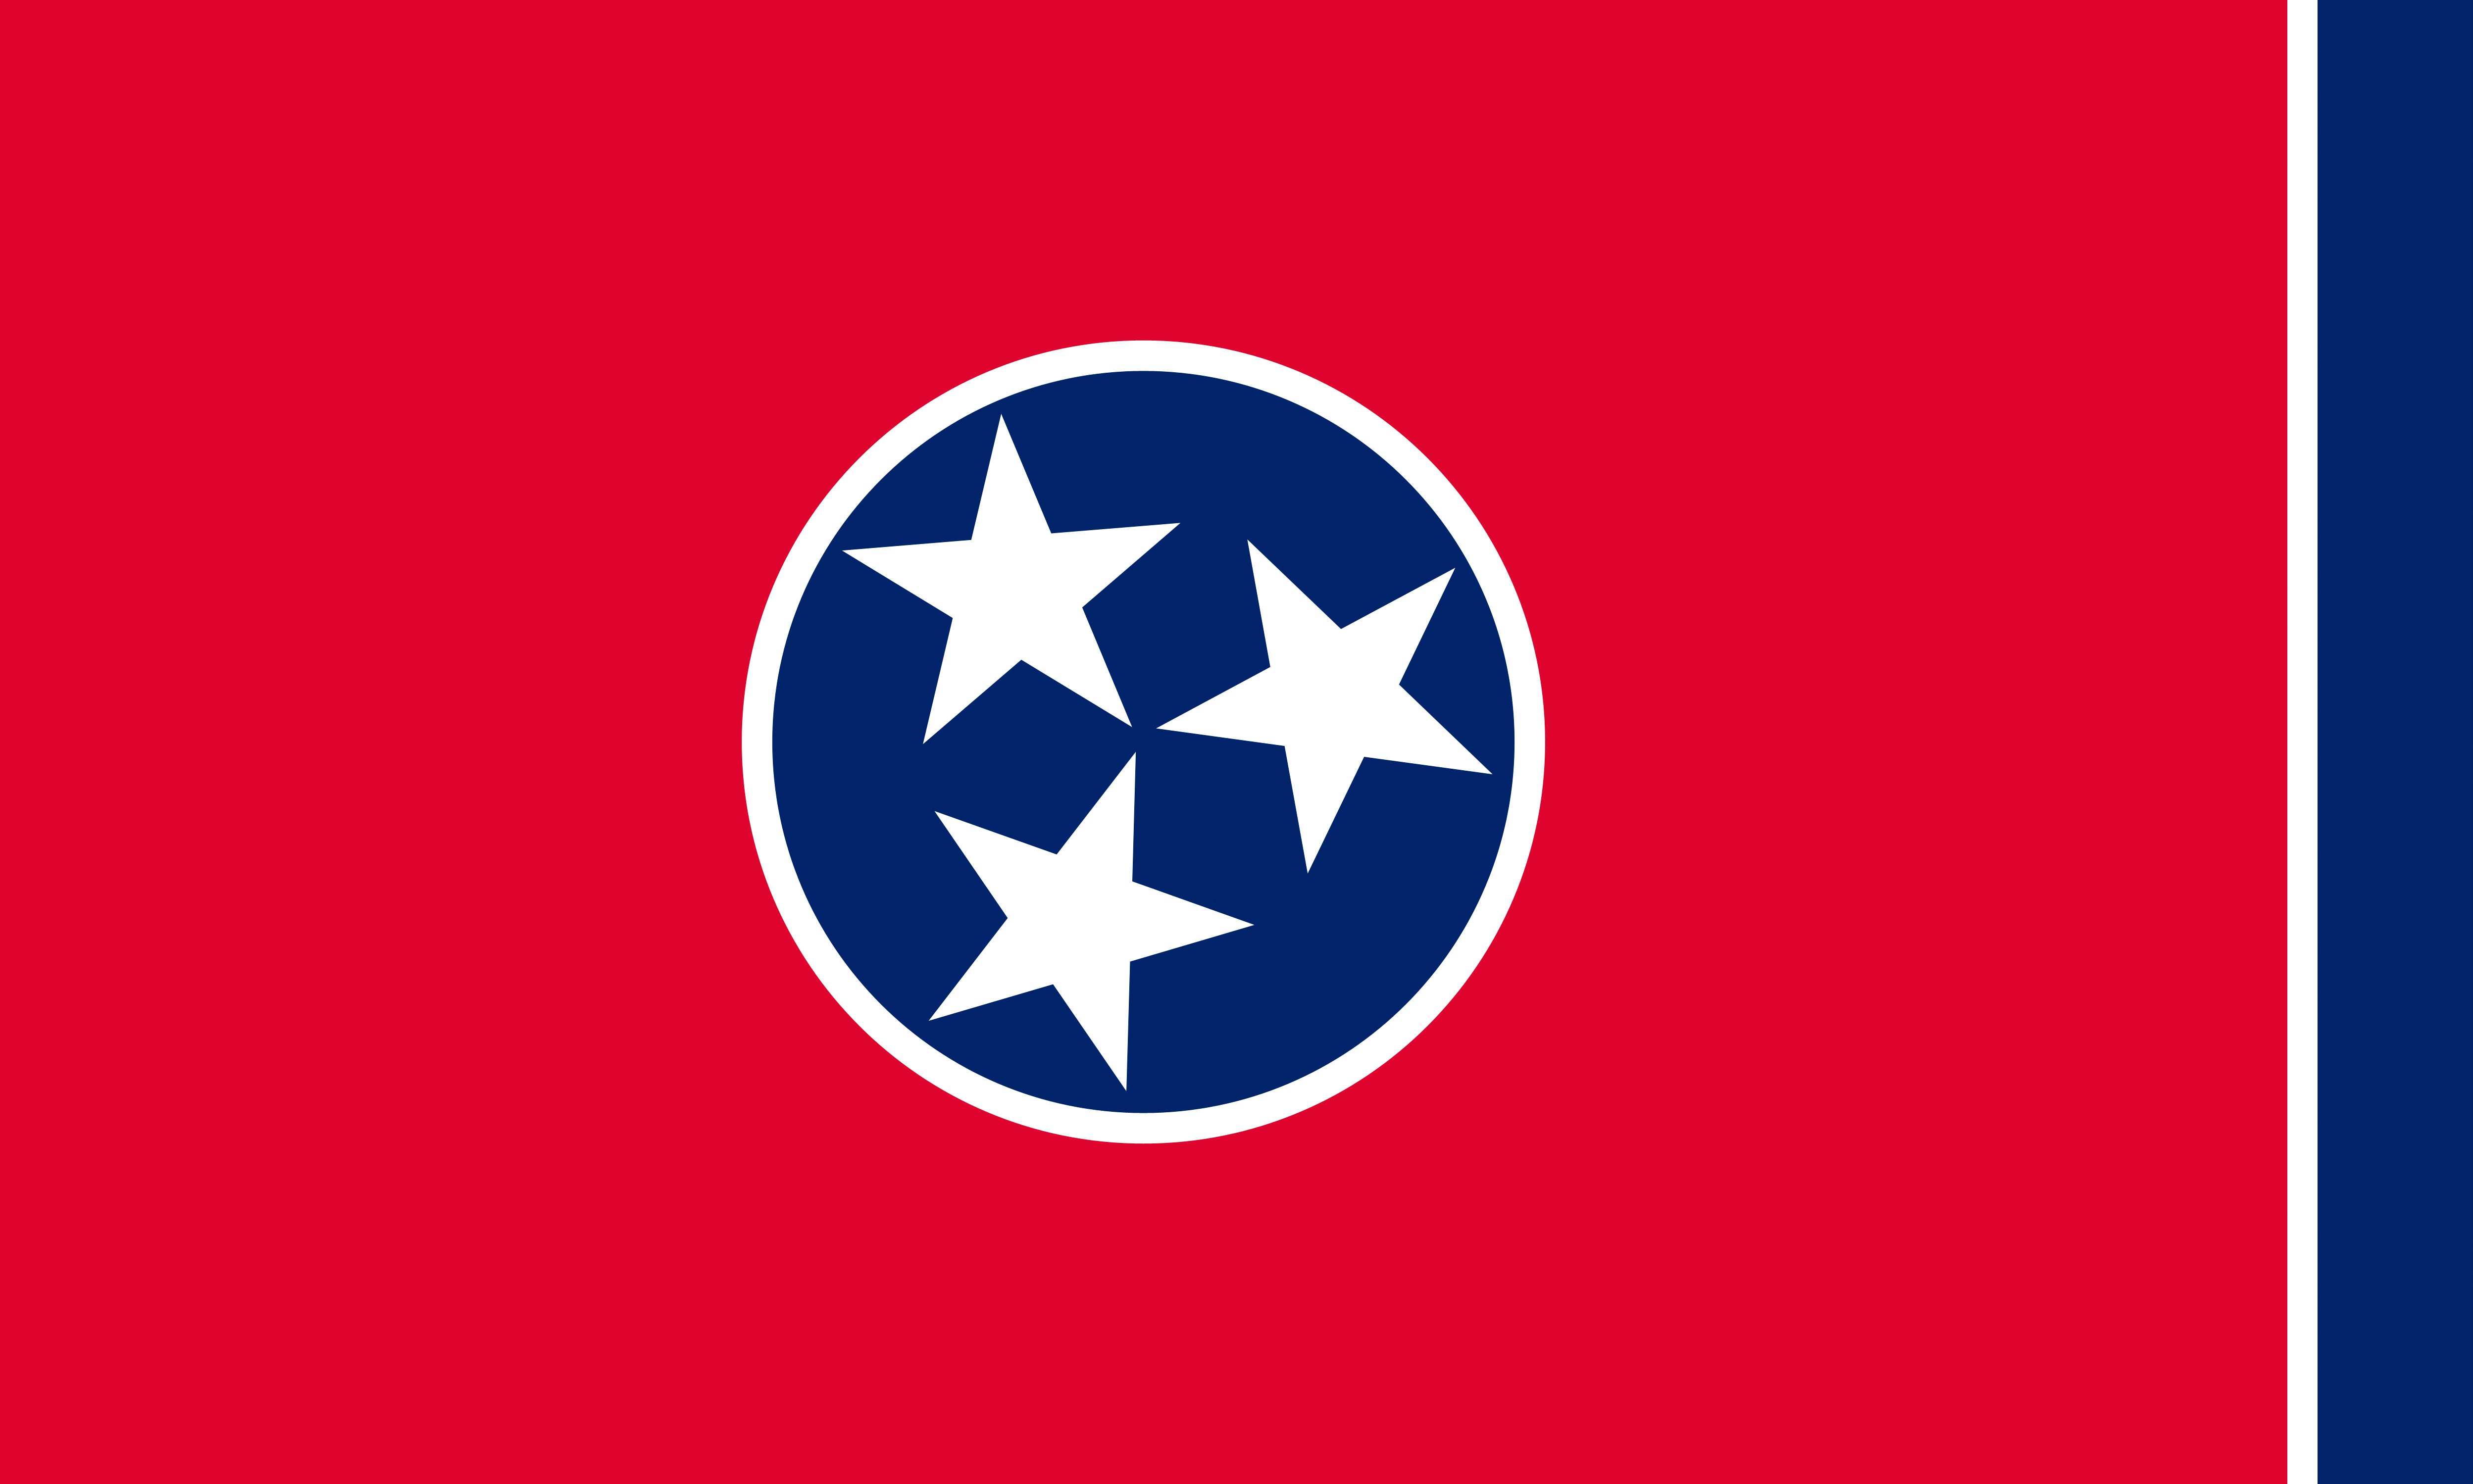 Фото америка Tennessee флага 4995x2998 США штаты Флаг